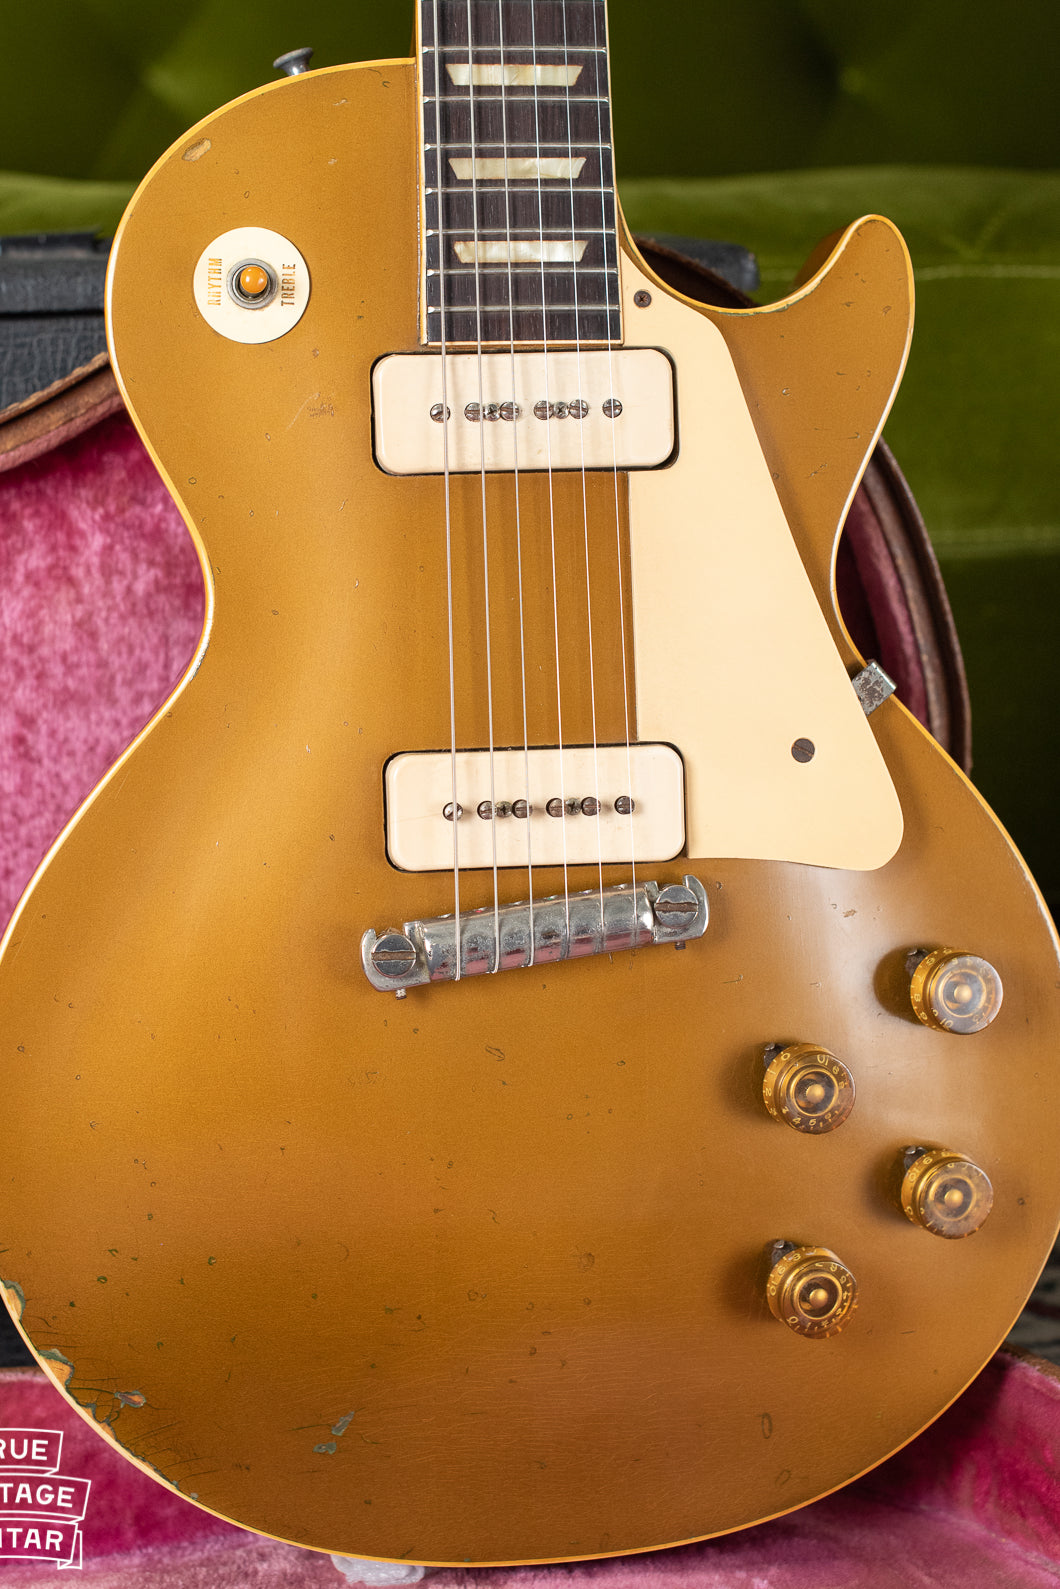 1954 Gibson Les Paul Goldtop guitar